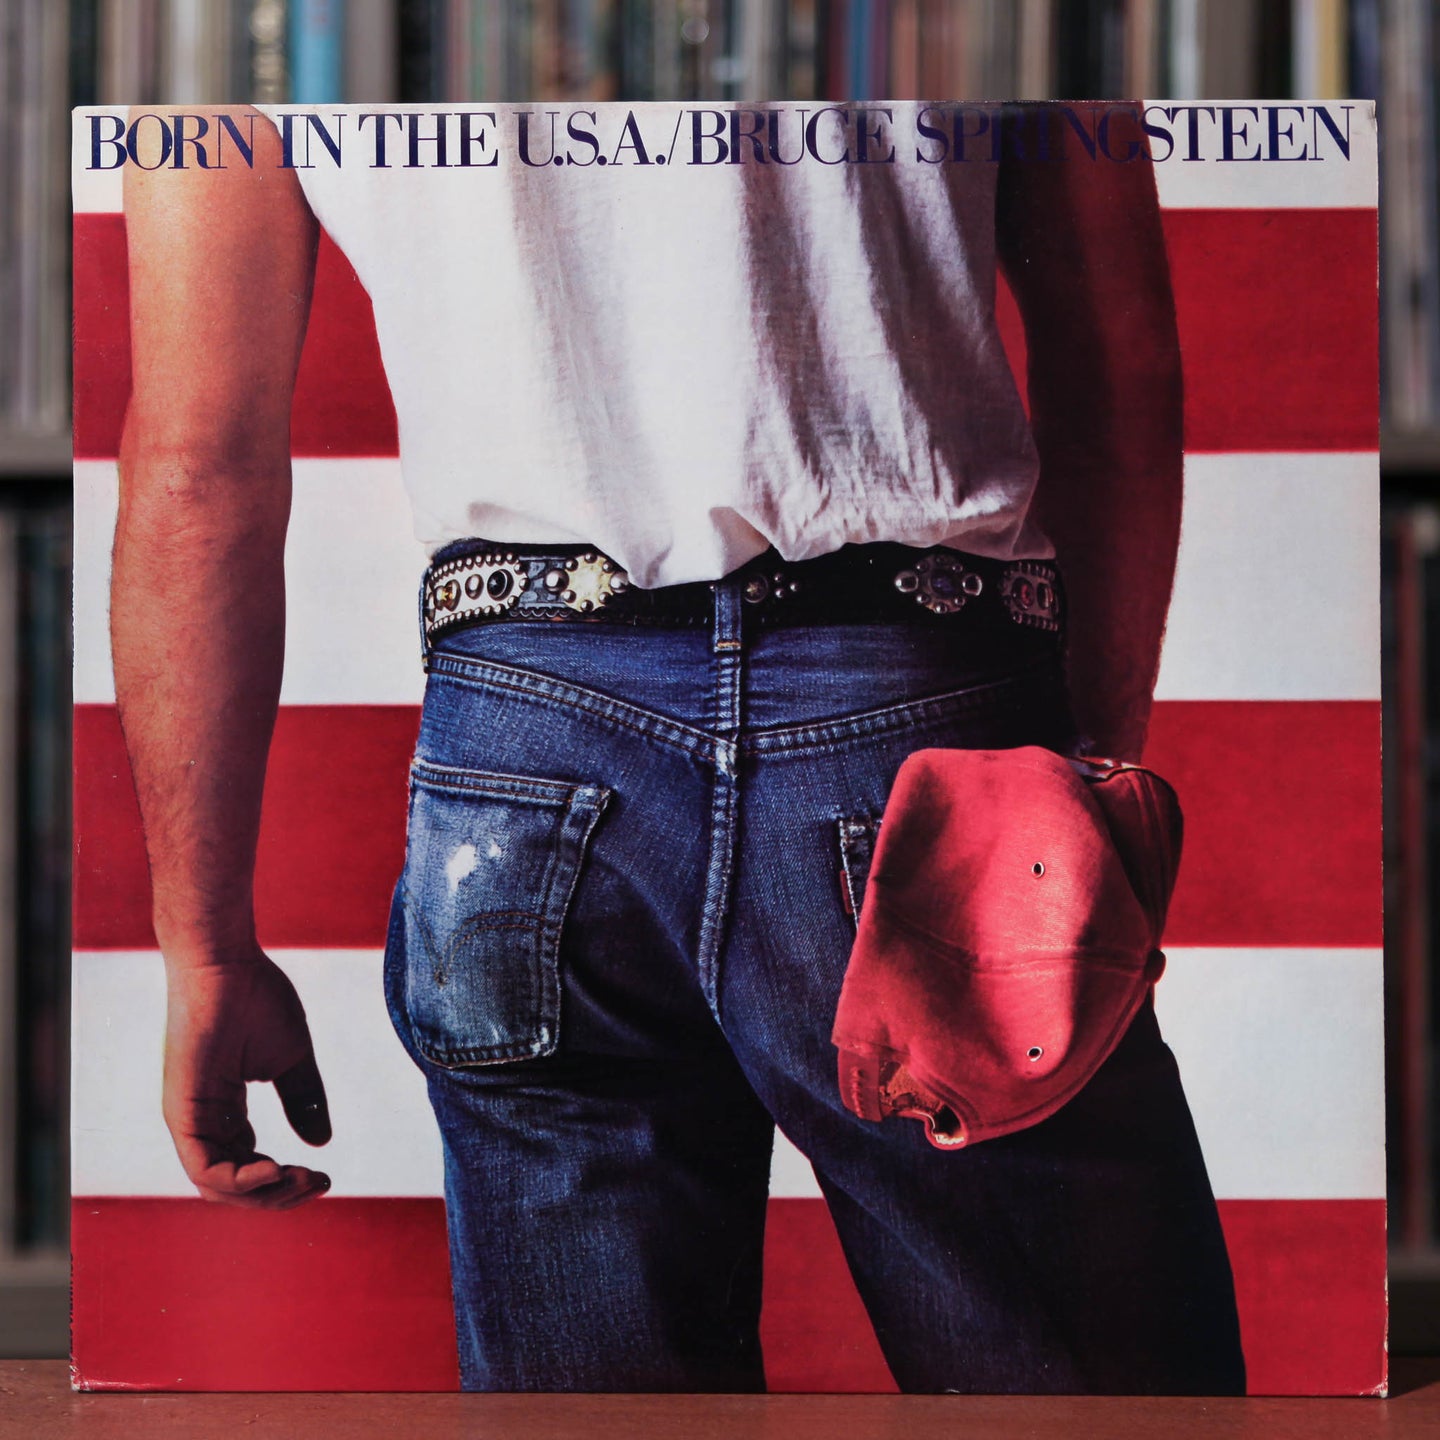 Bruce Springsteen - Born In The U.S.A. - 1984  Columbia, EX/EX